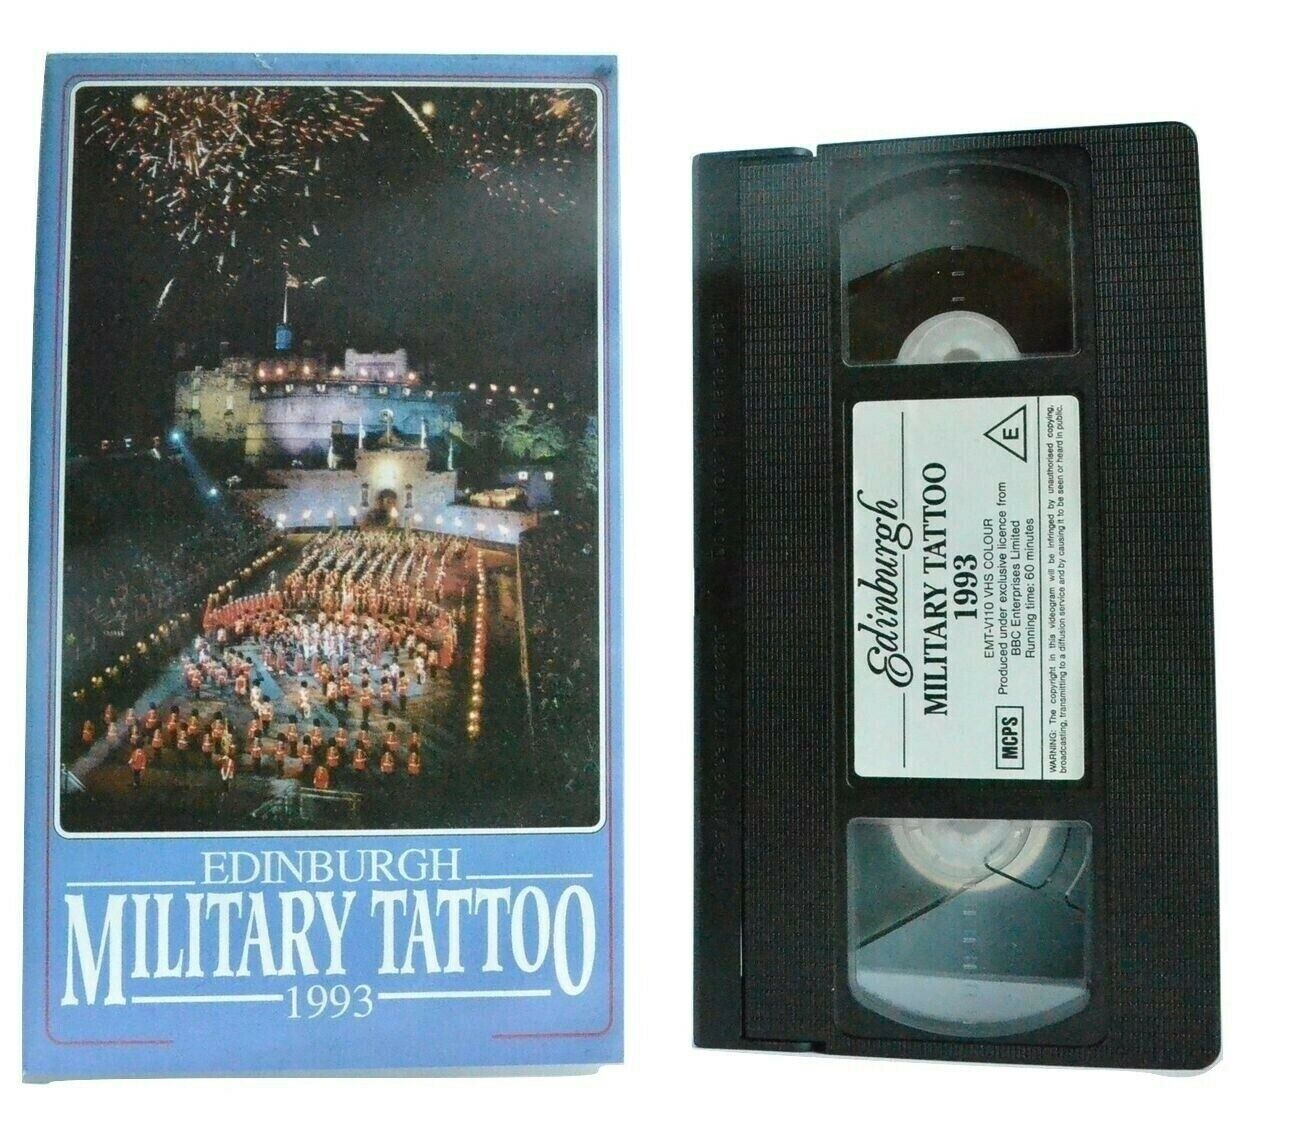 Military Tattoo: Edinburgh 1993 - Royal Scotland - Castle Esplanade - Pal VHS-